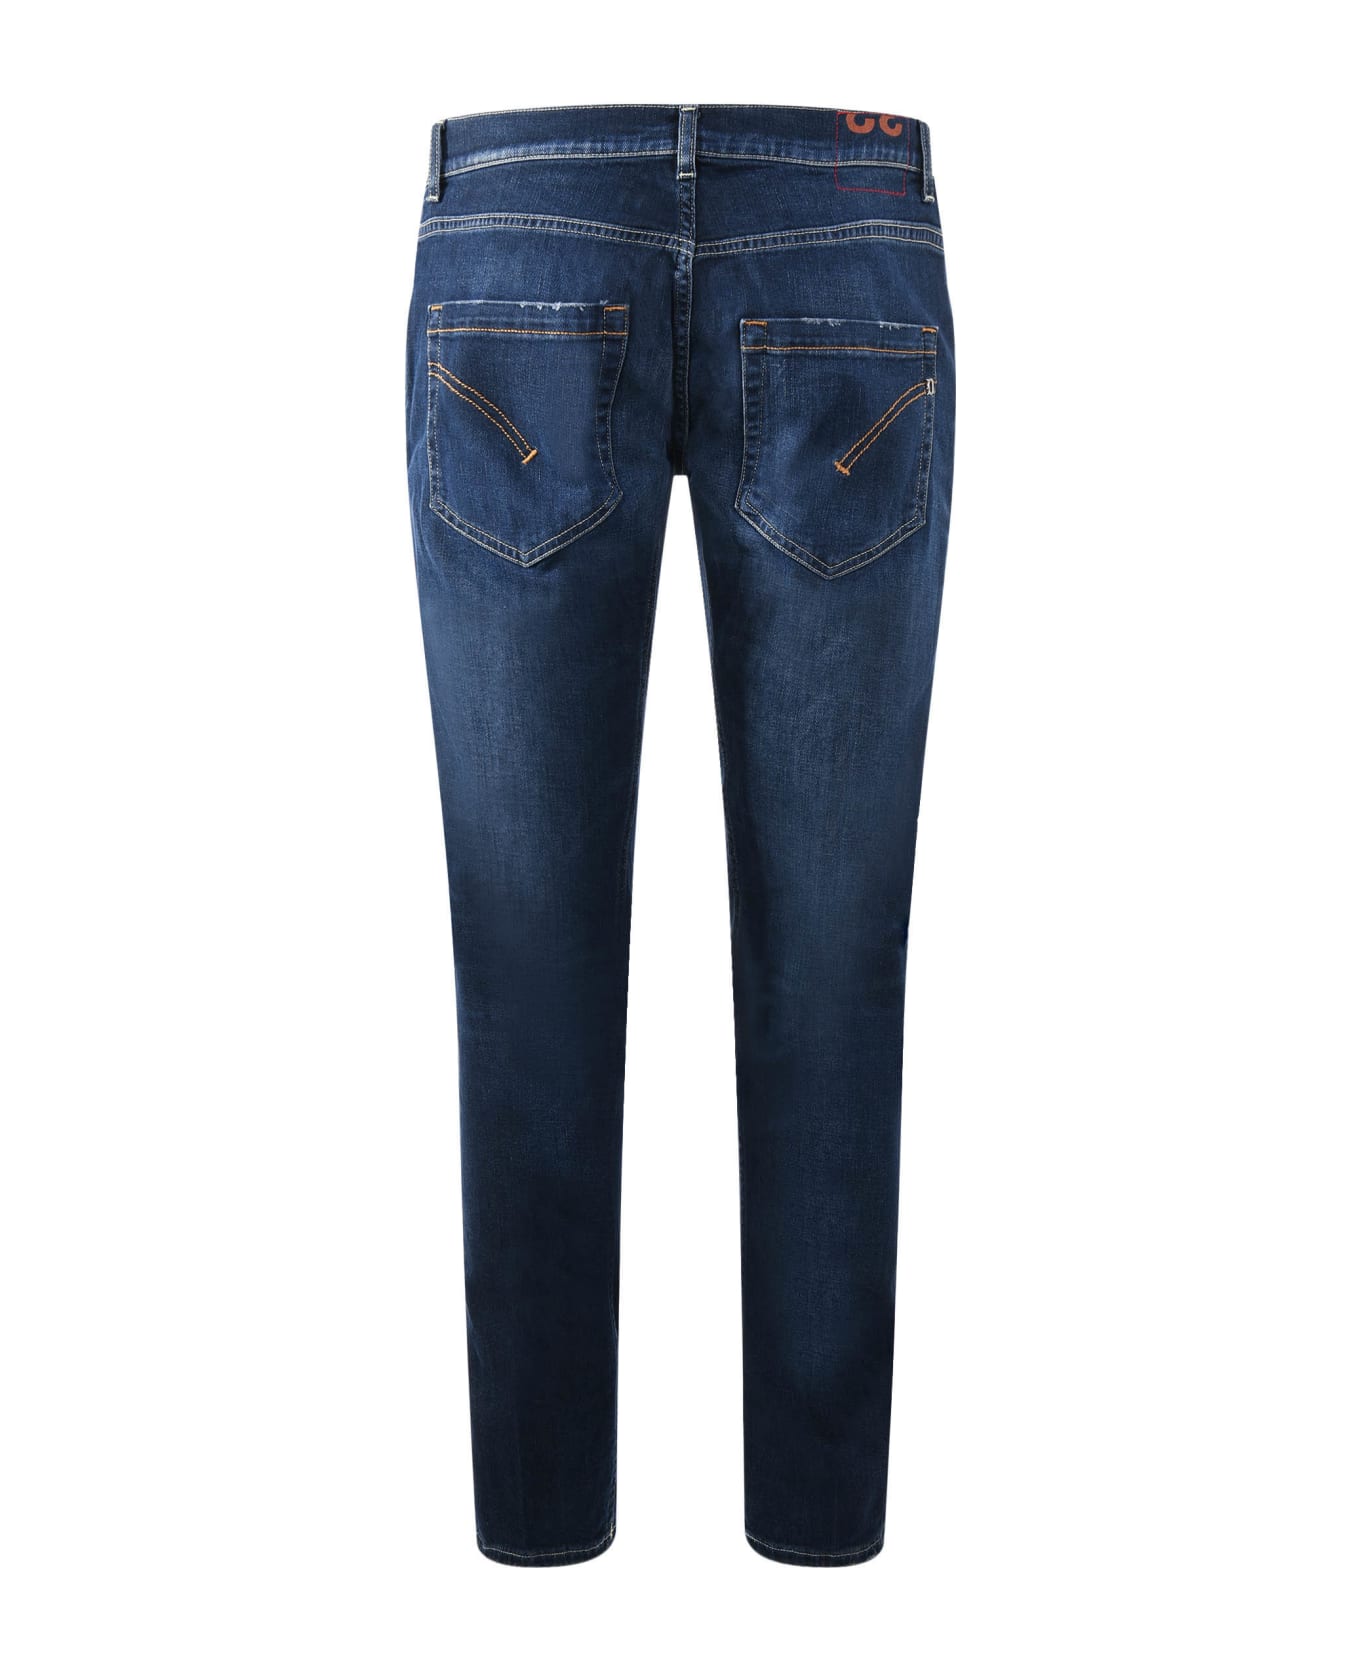 Dondup Mius Slim Fit Jeans In Dark Blue Stretch Denim - Blue デニム